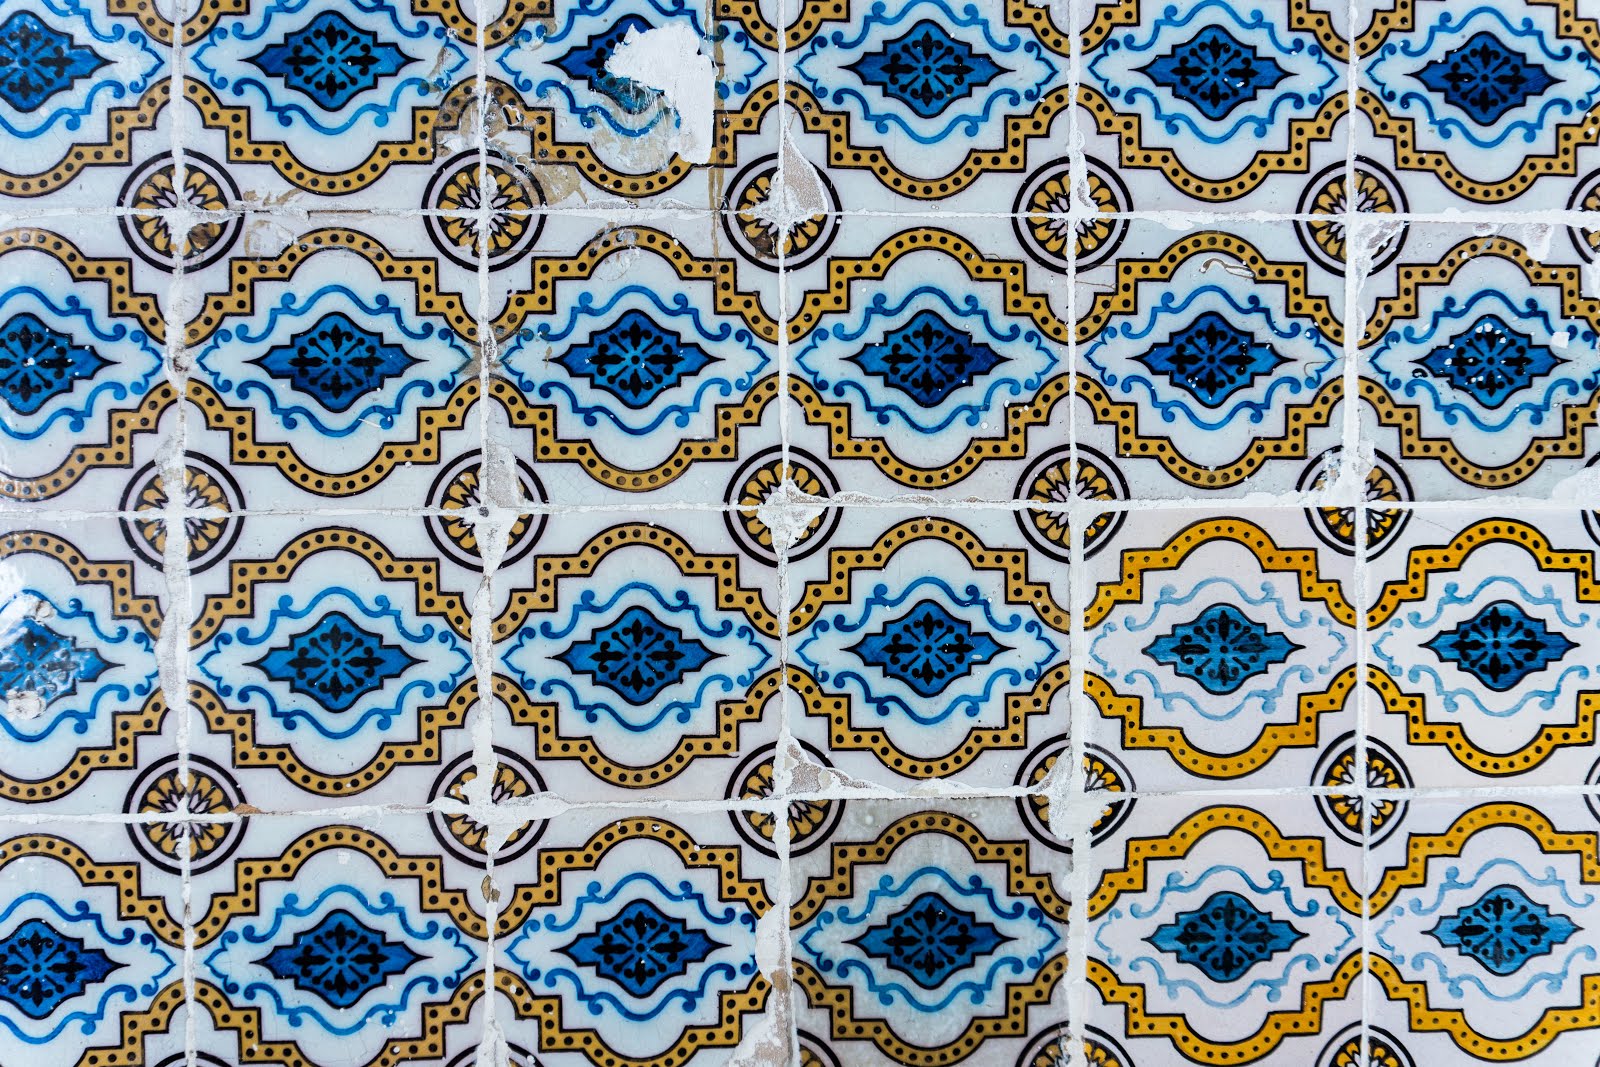 Typical Lisbon tiles // Photo credit @heyandiehey